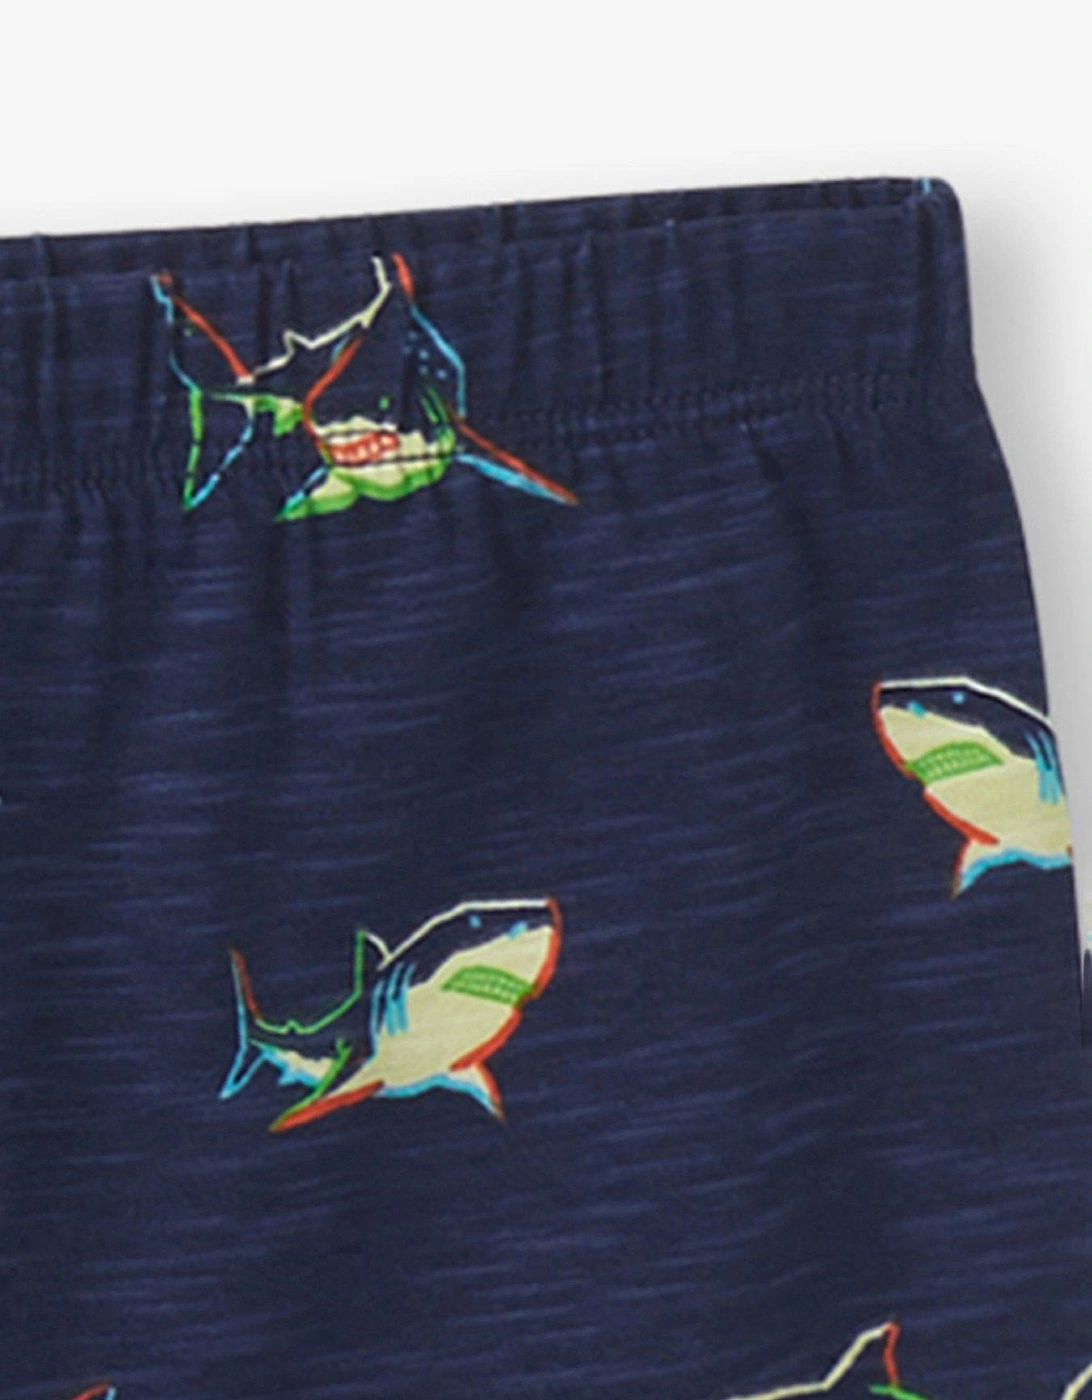 Boys Glow Sharks Short Pyjama Set - Patriot Blue